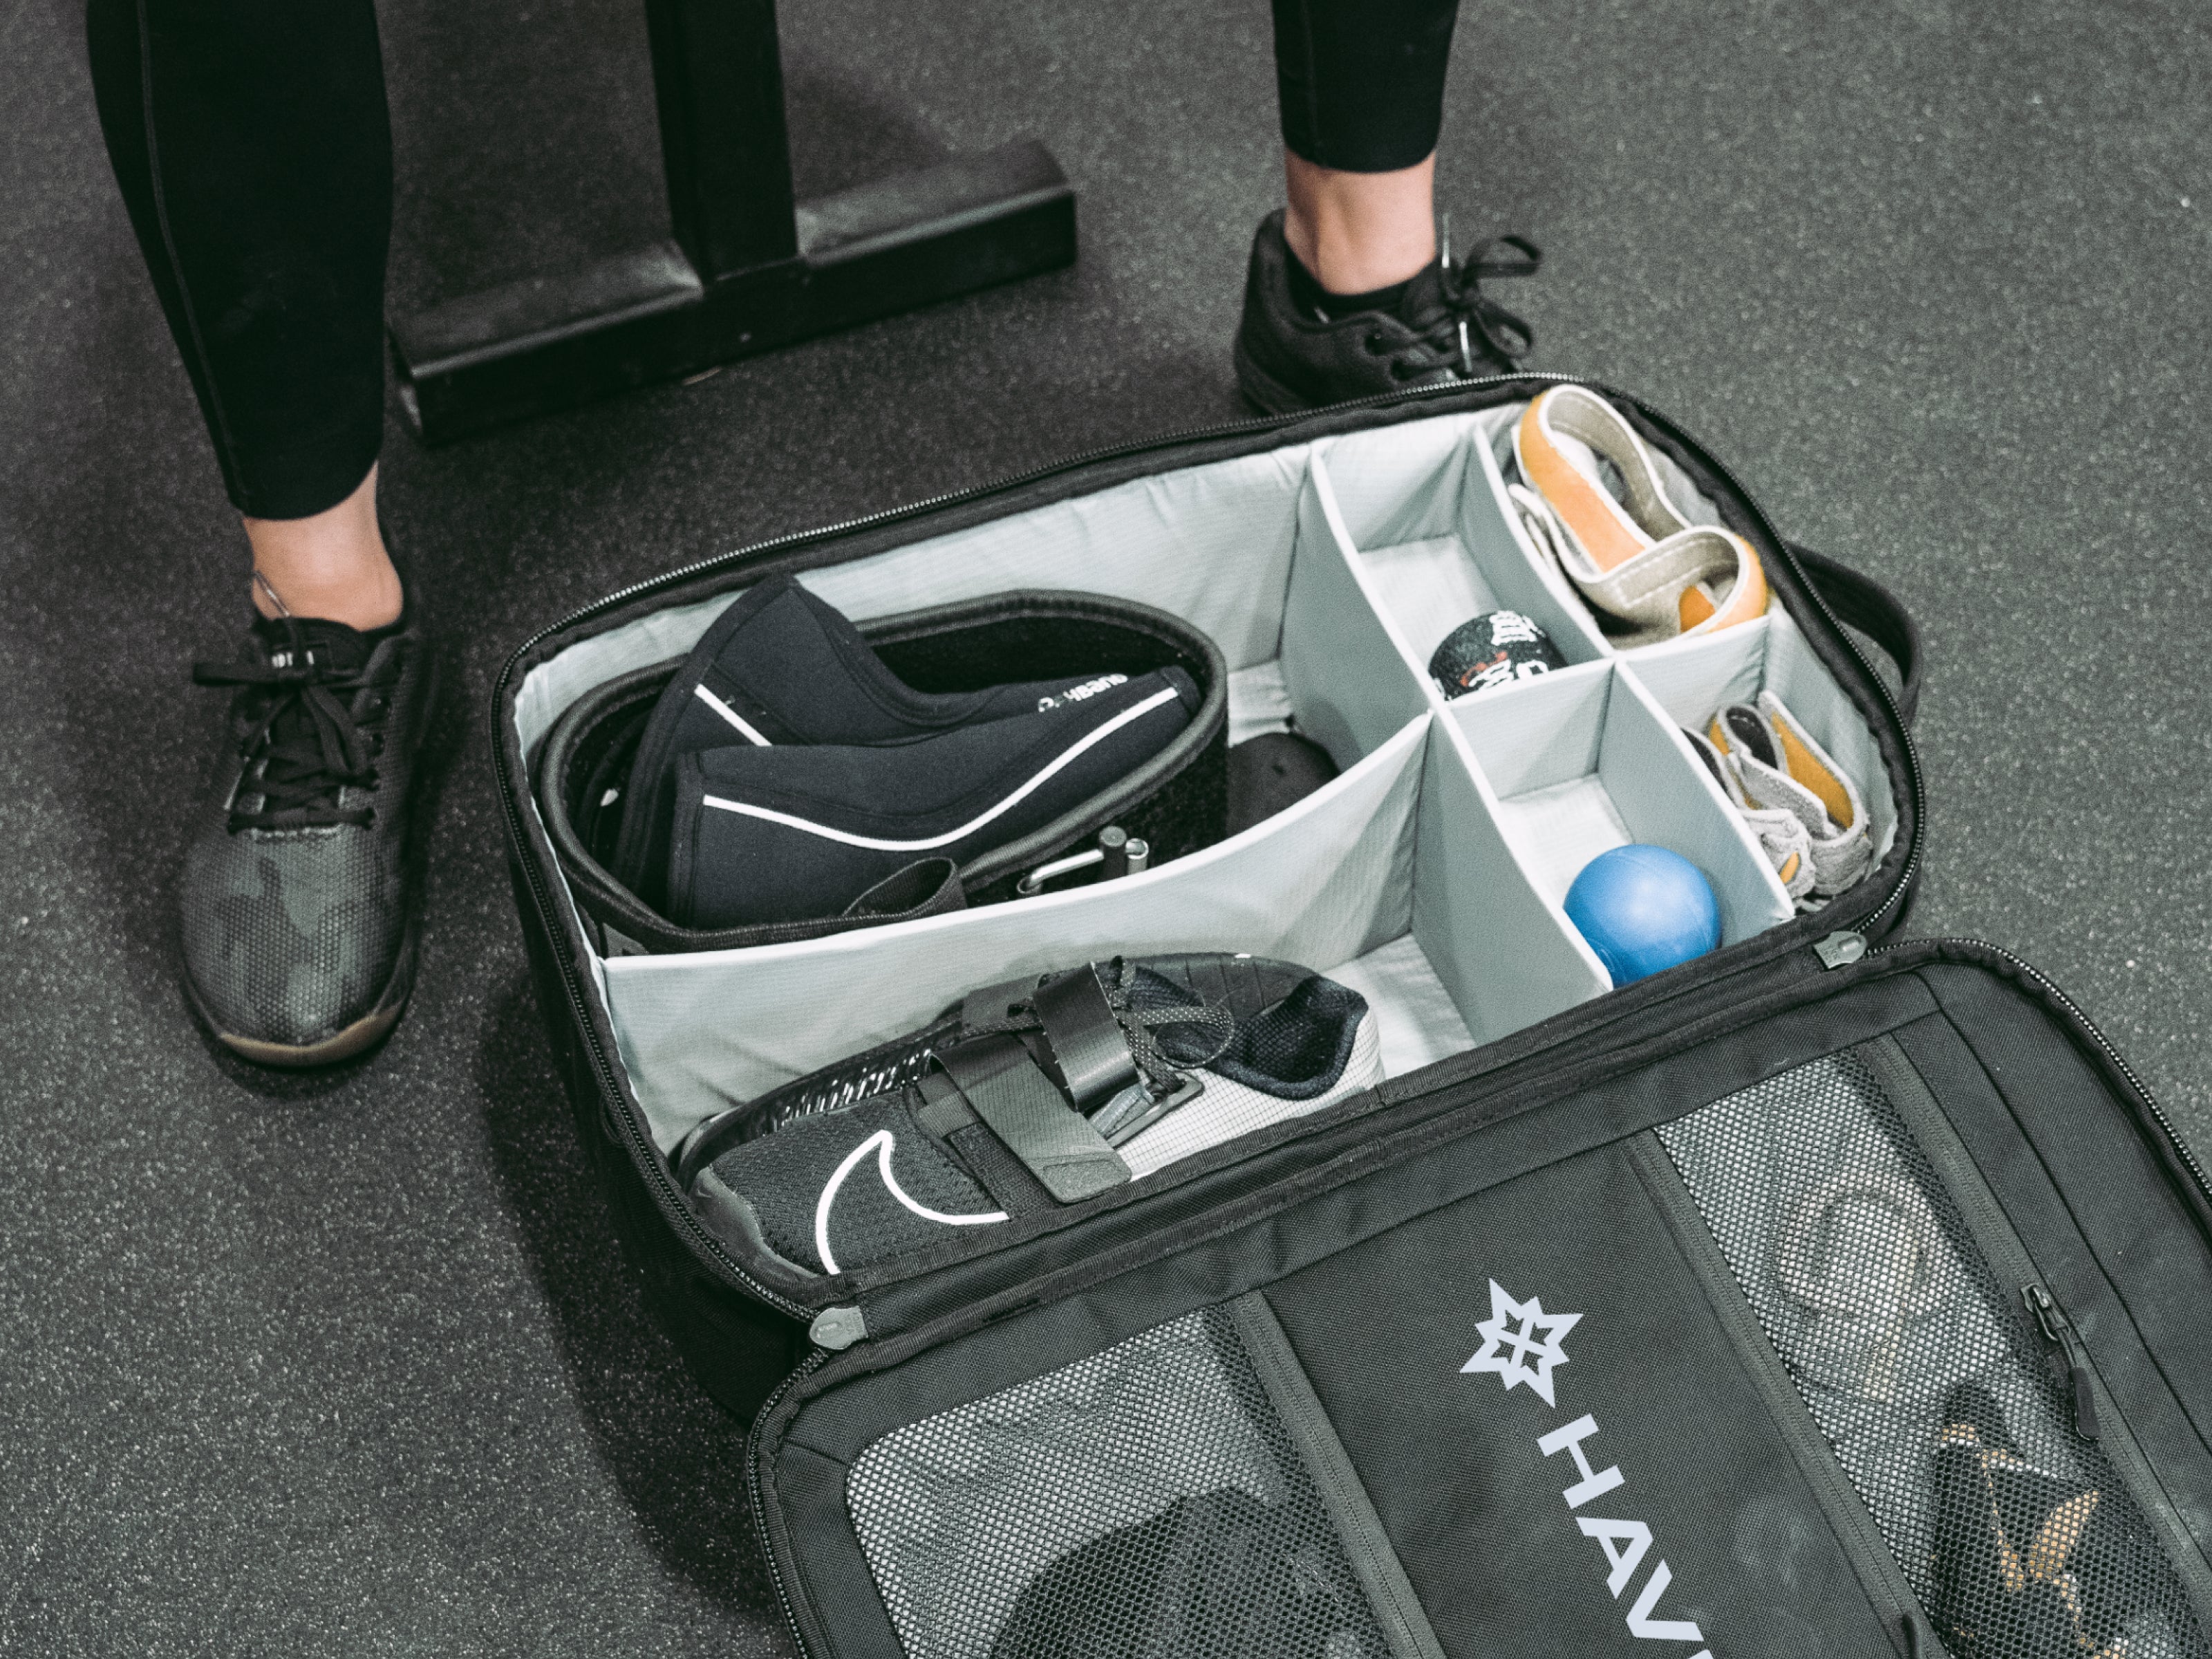 Approach Rolling Gear Bag, Medium | Luggage at L.L.Bean